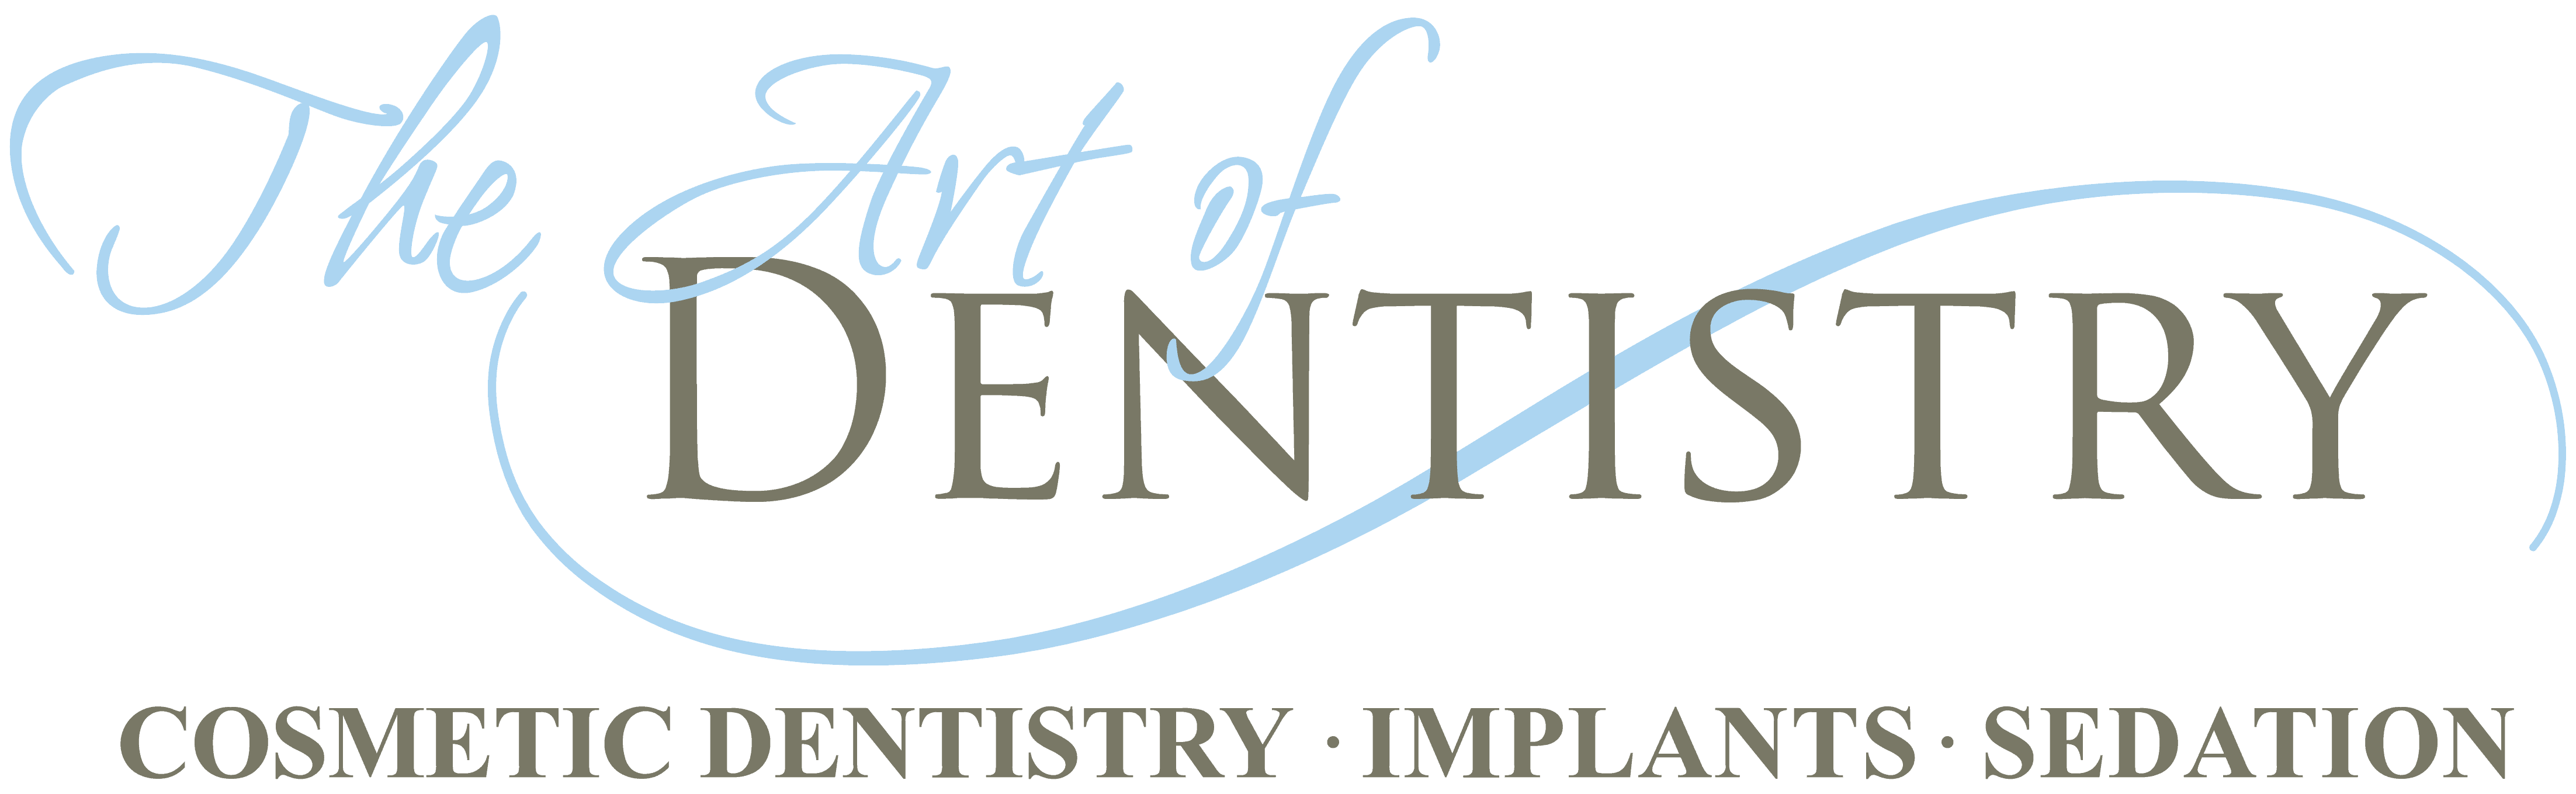 Business logo of The Art of Dentistry - Brian Fann, DDS